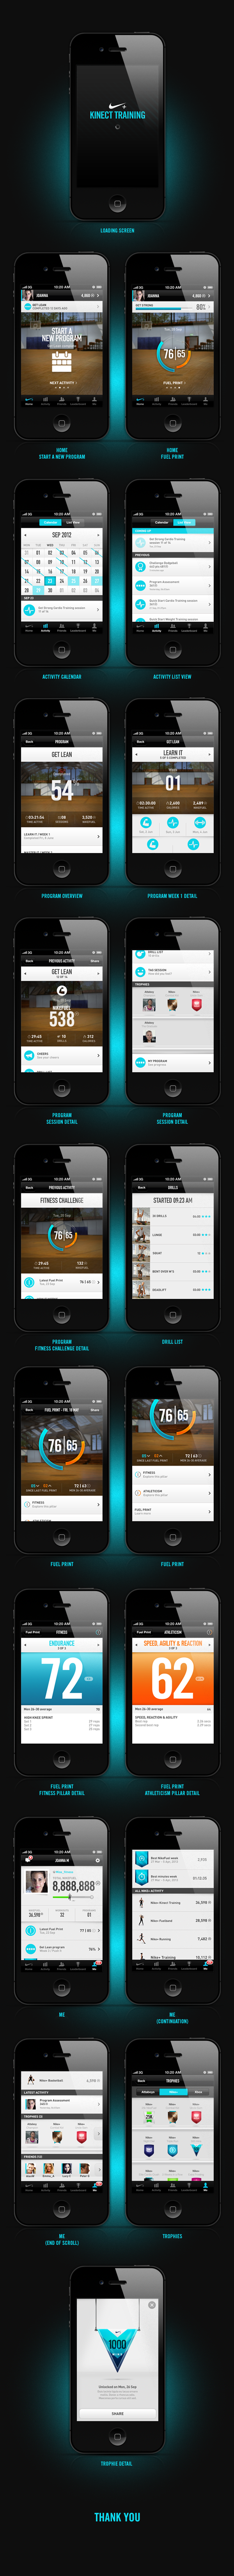 Nike+ Kinect Training (iphone app)